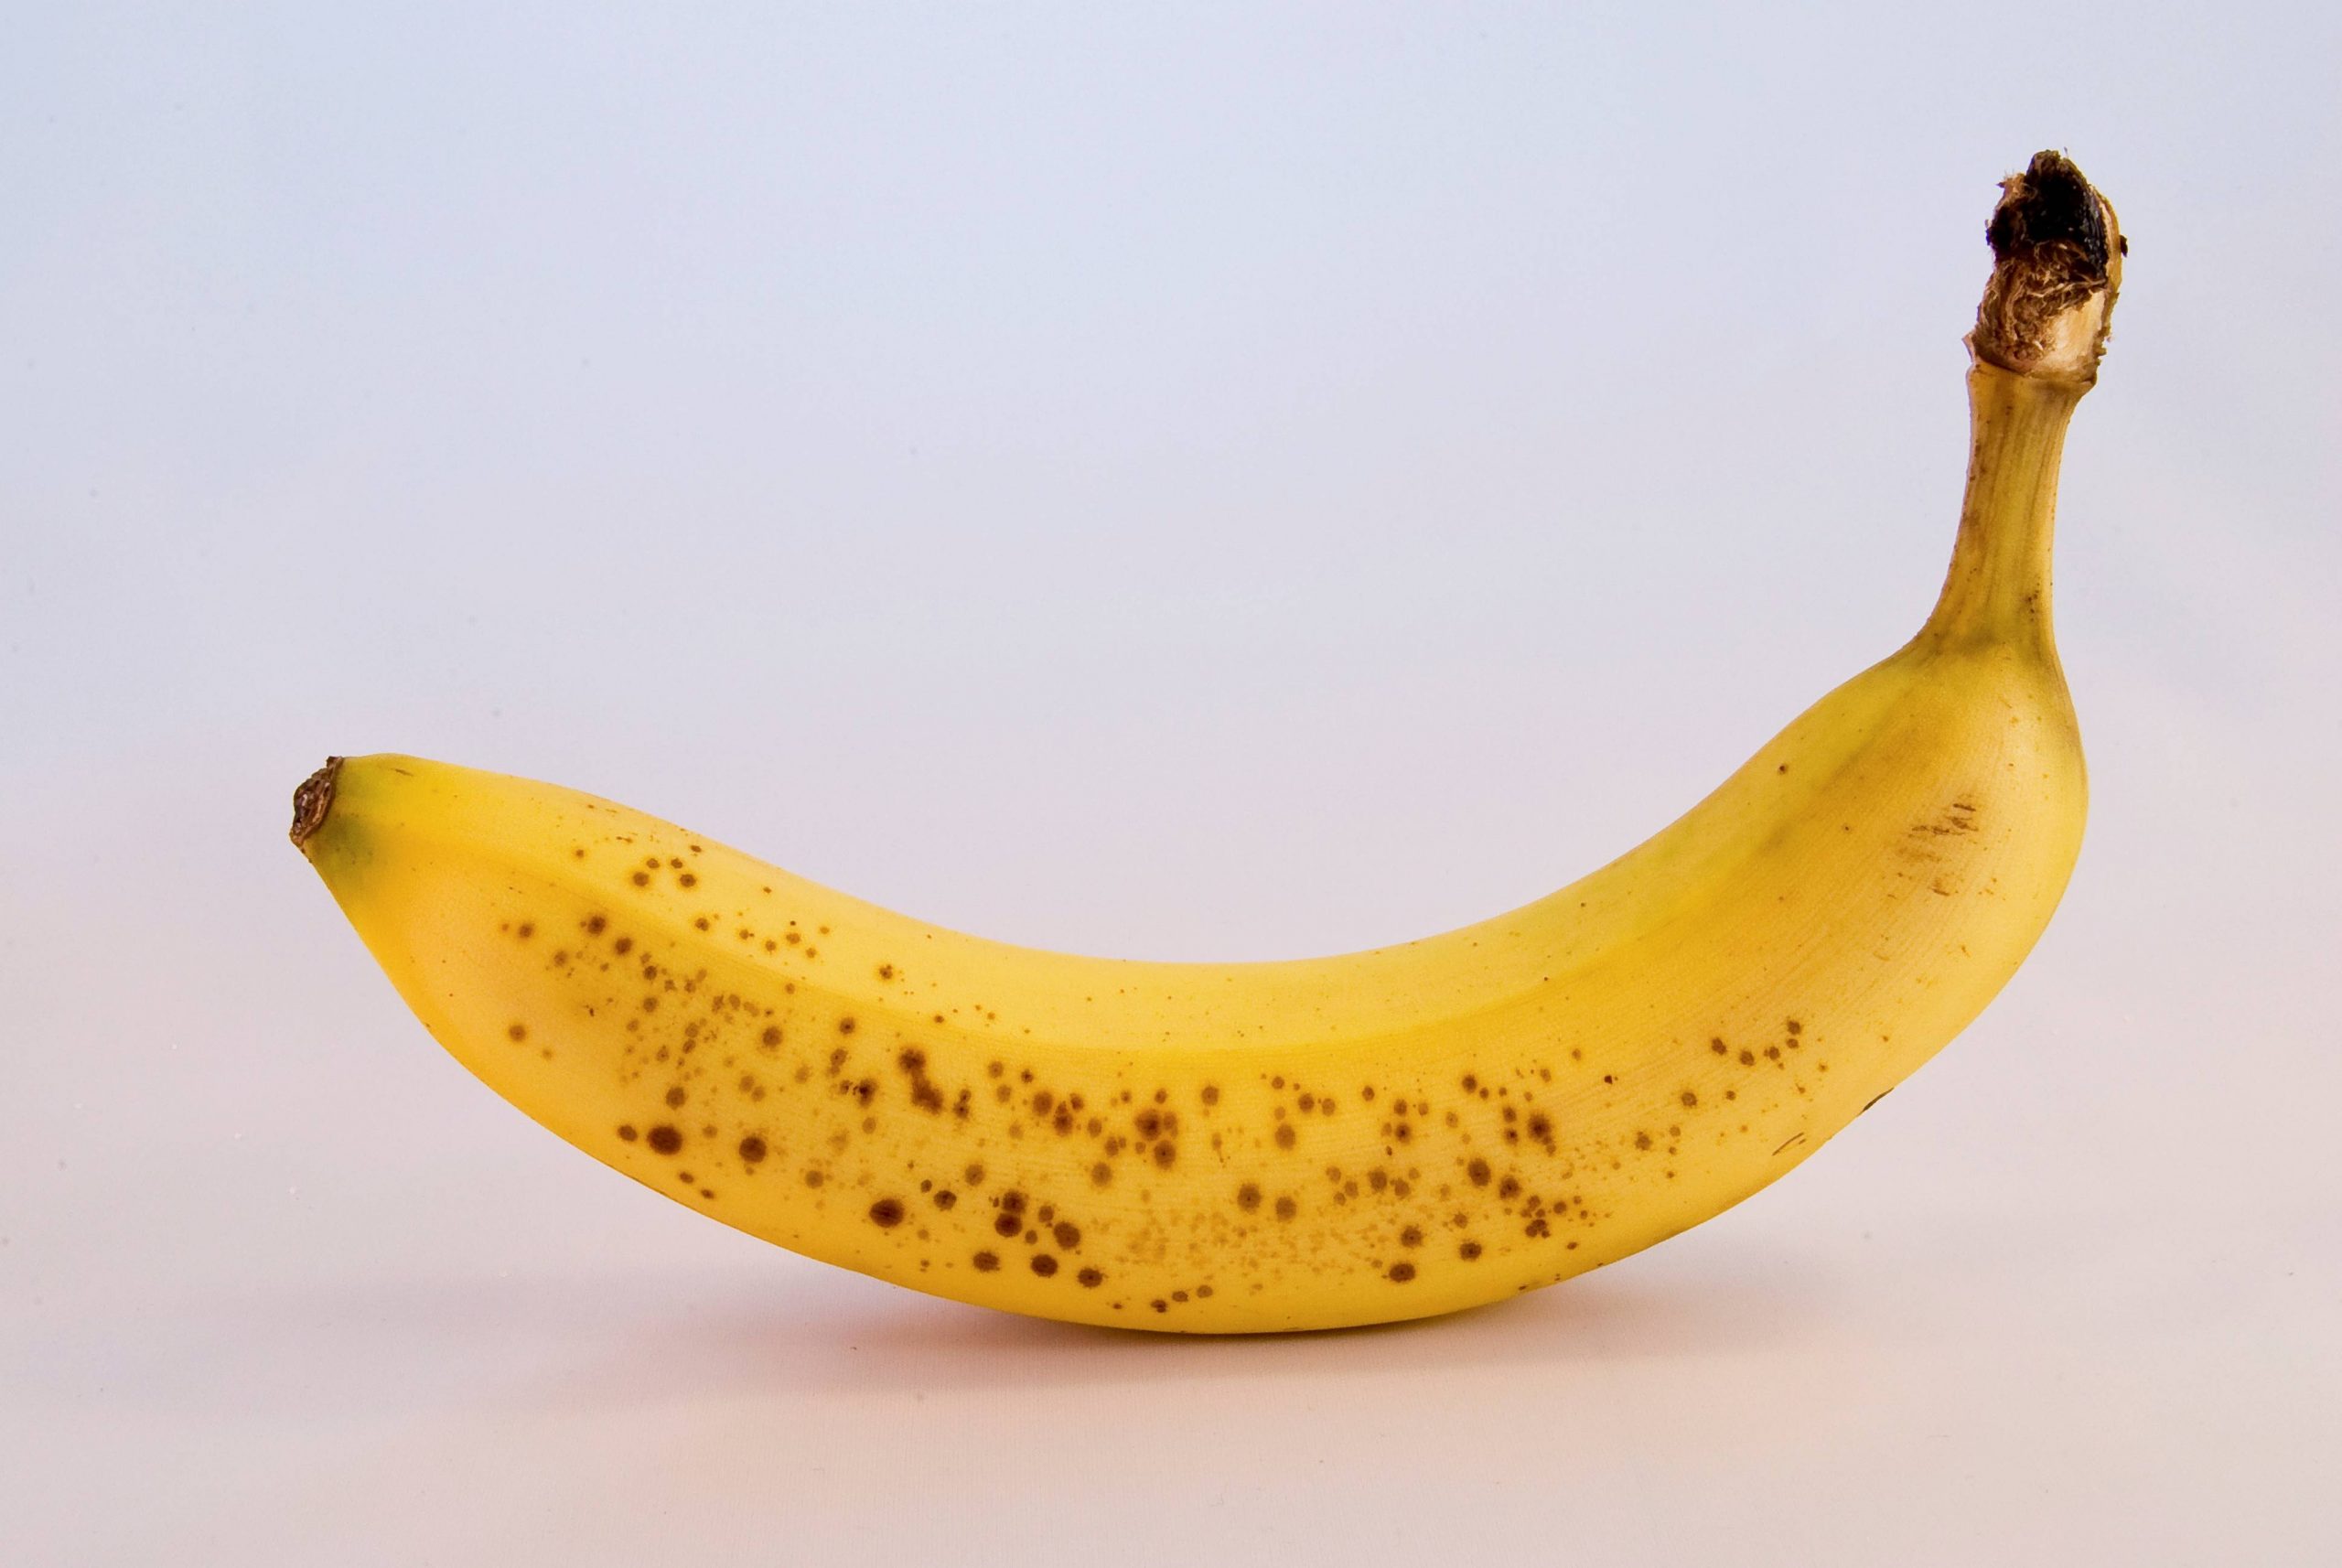 Do Bananas Lower Testosterone?